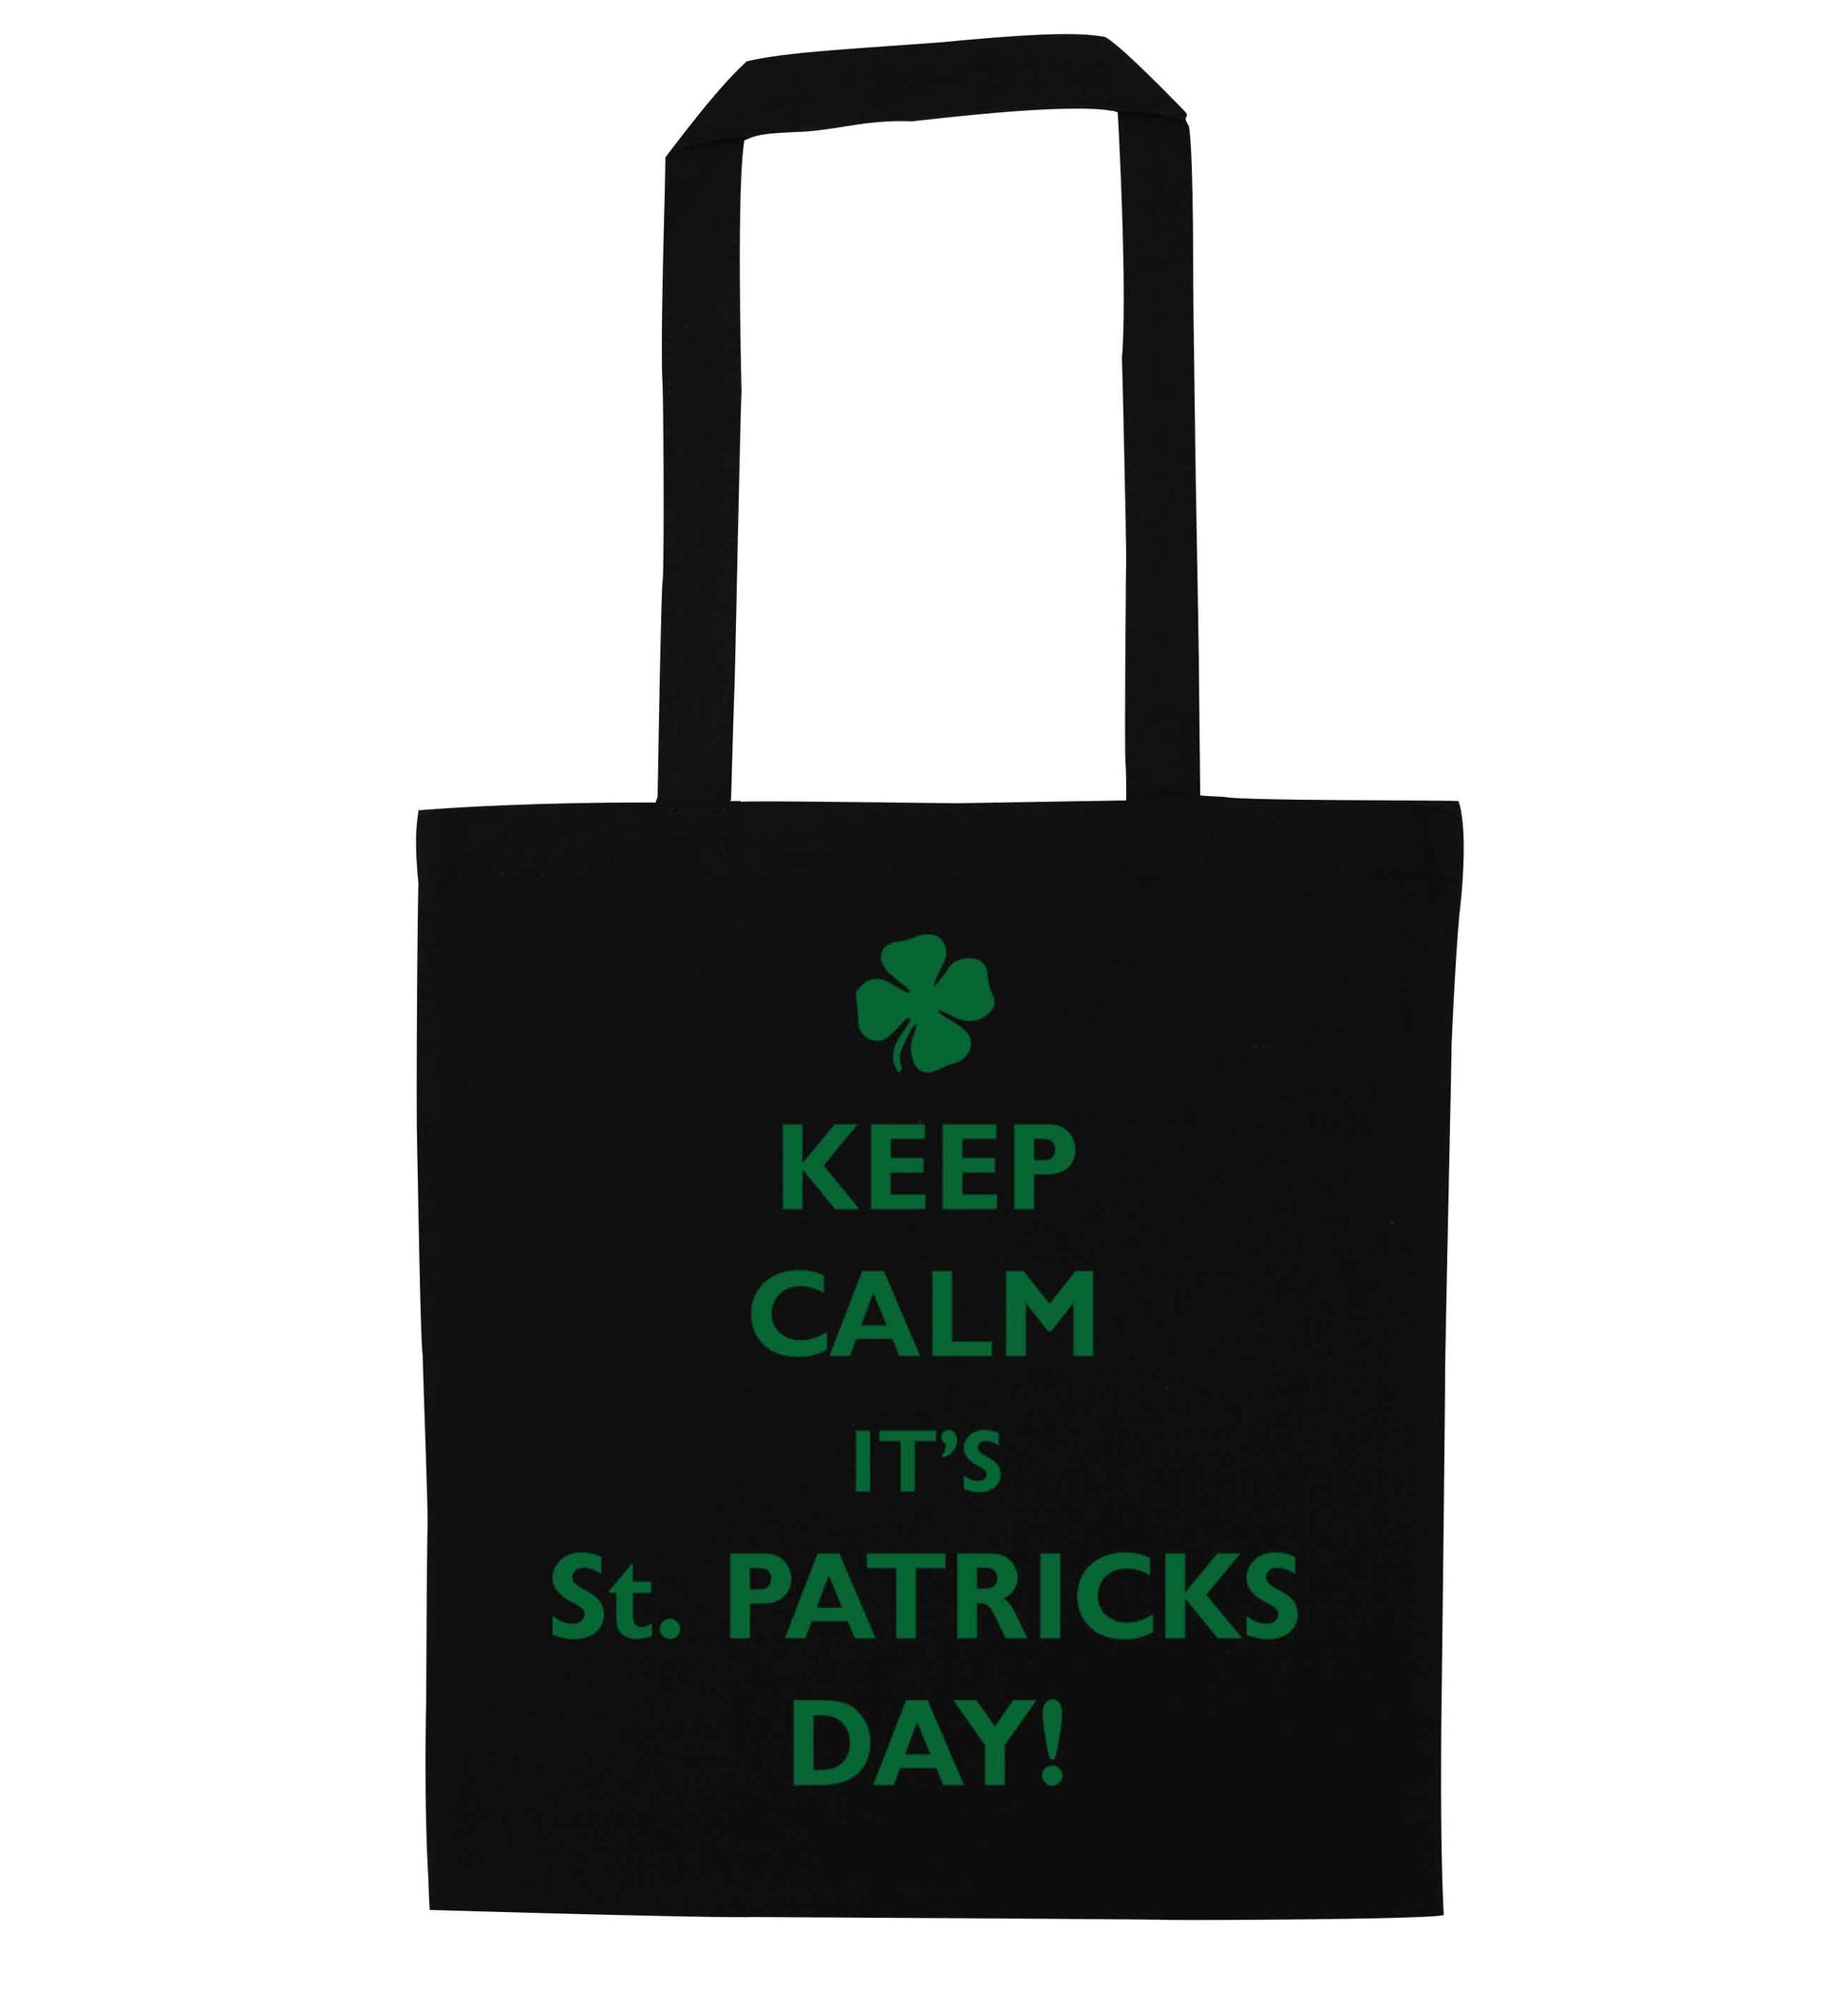 Keep calm it's St.Patricks day black tote bag